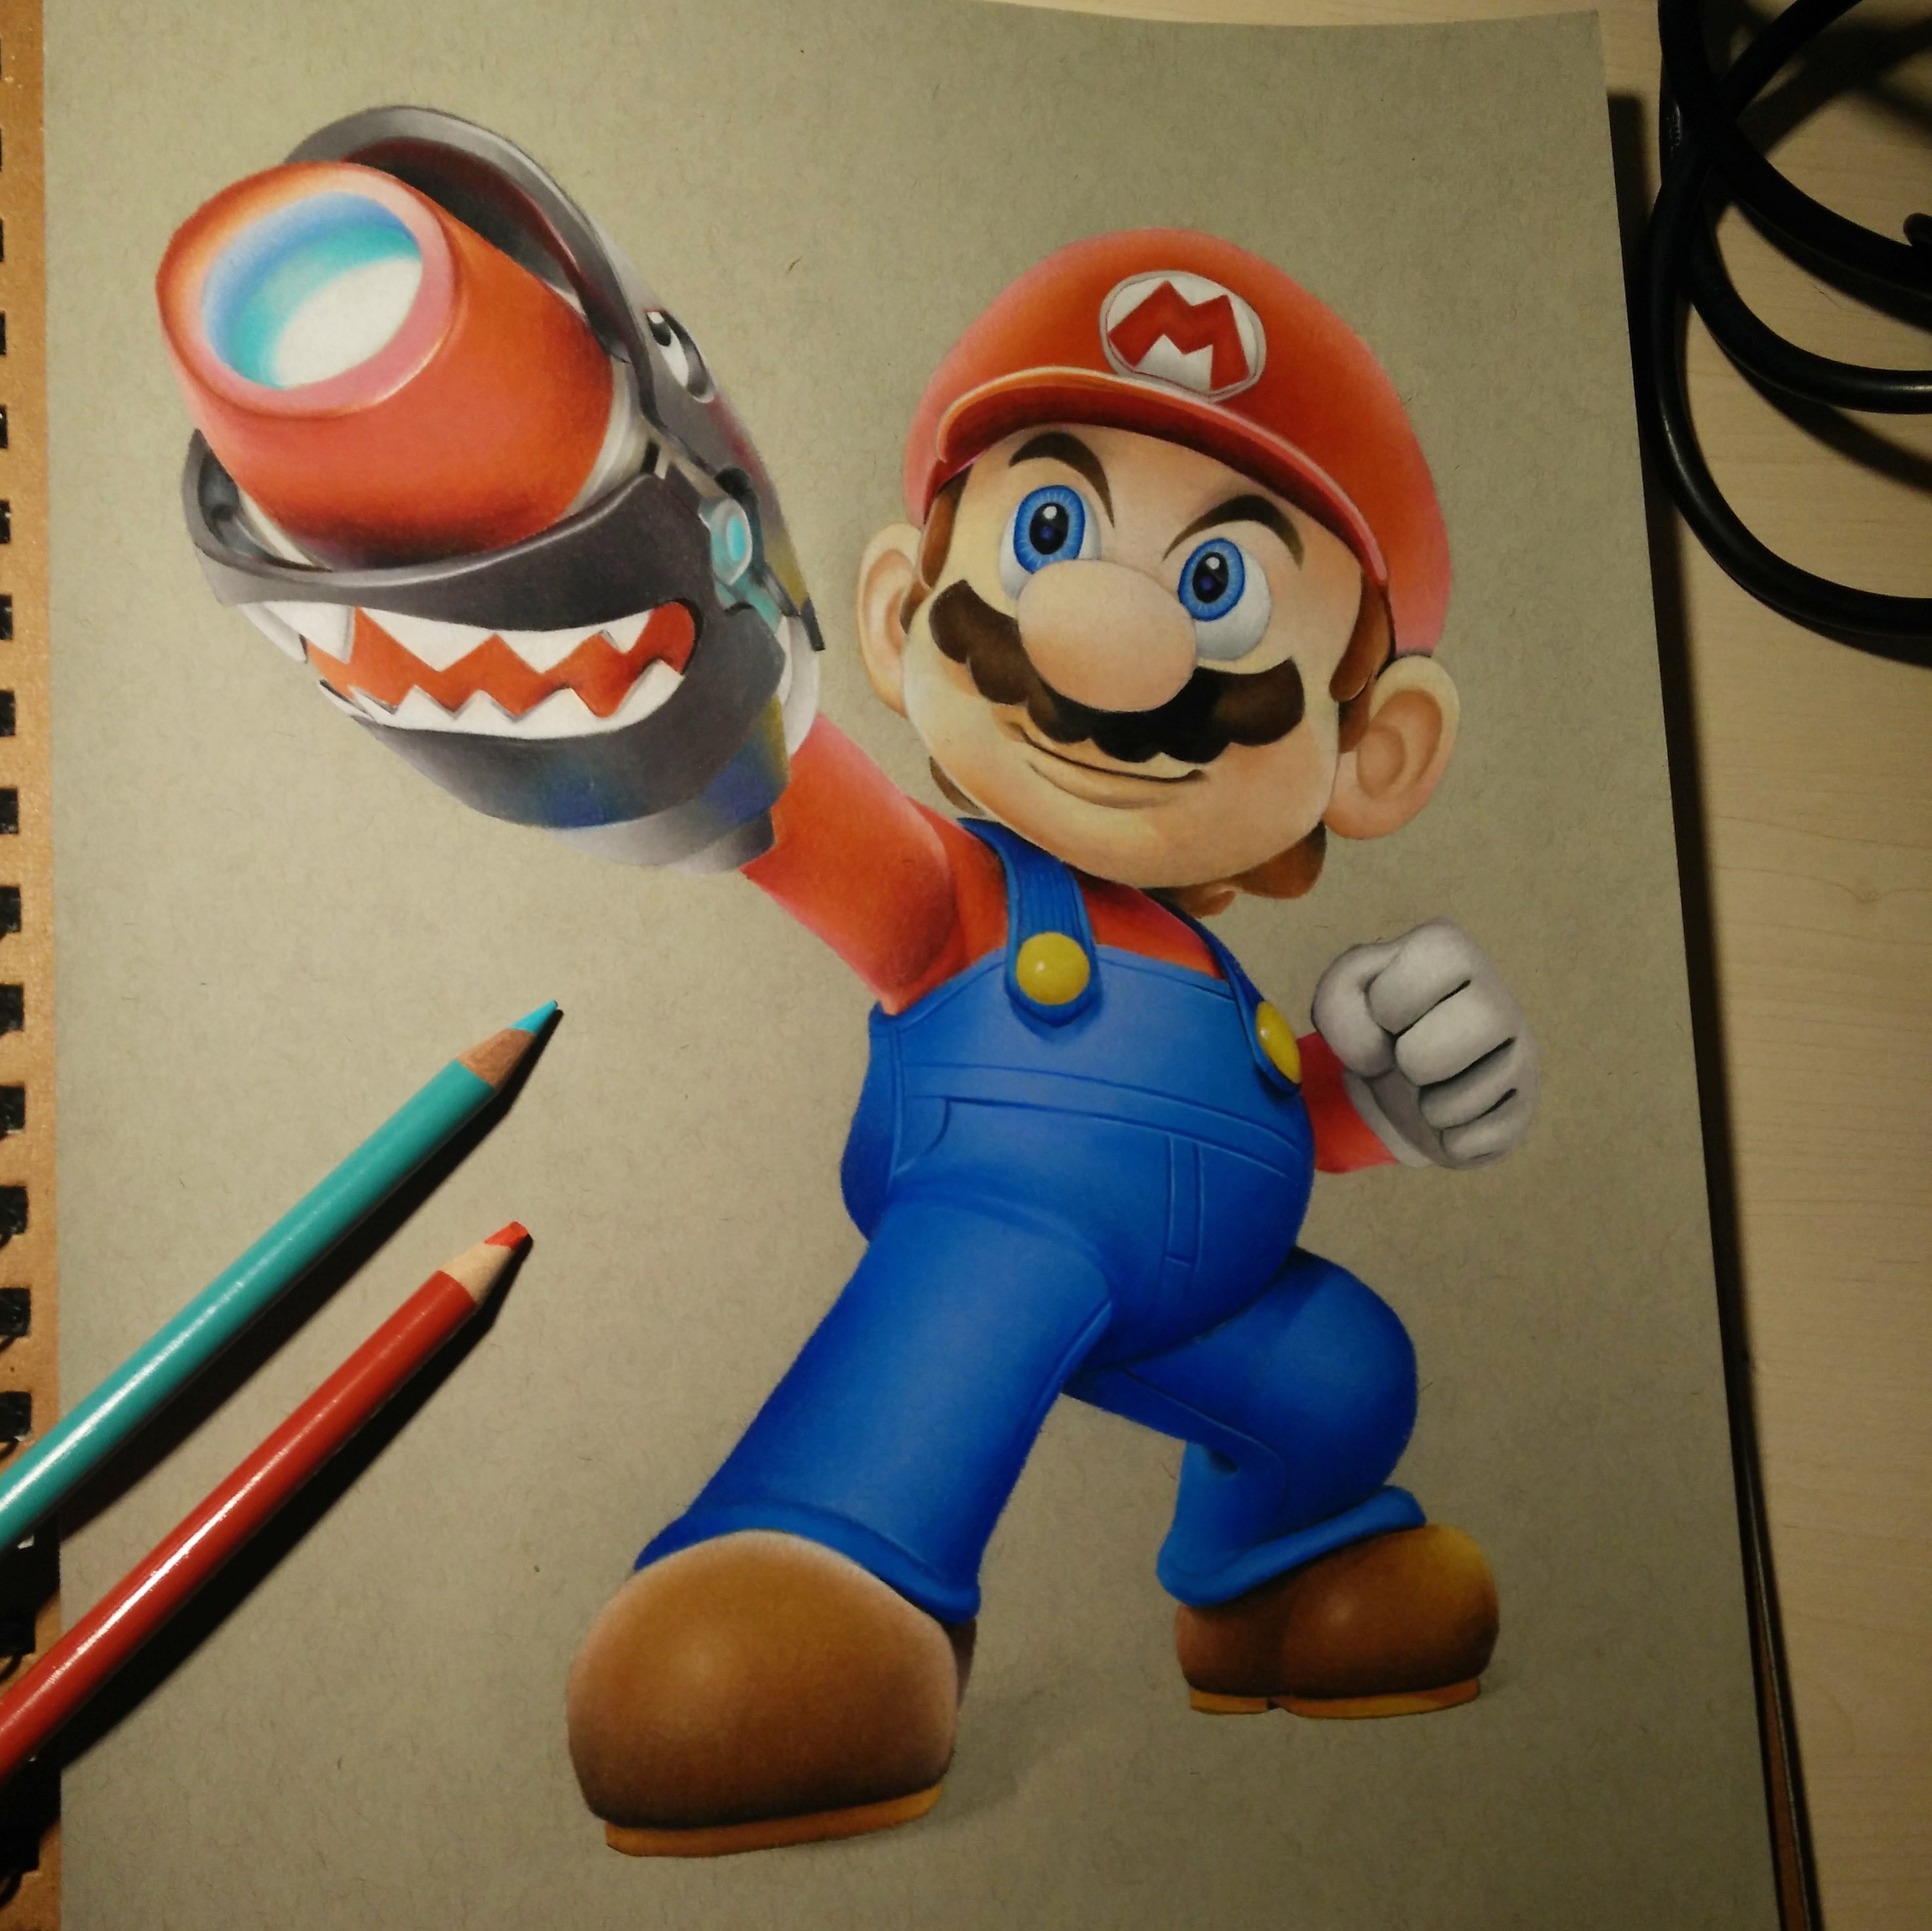 Mario Cartoon Drawing at Explore collection of